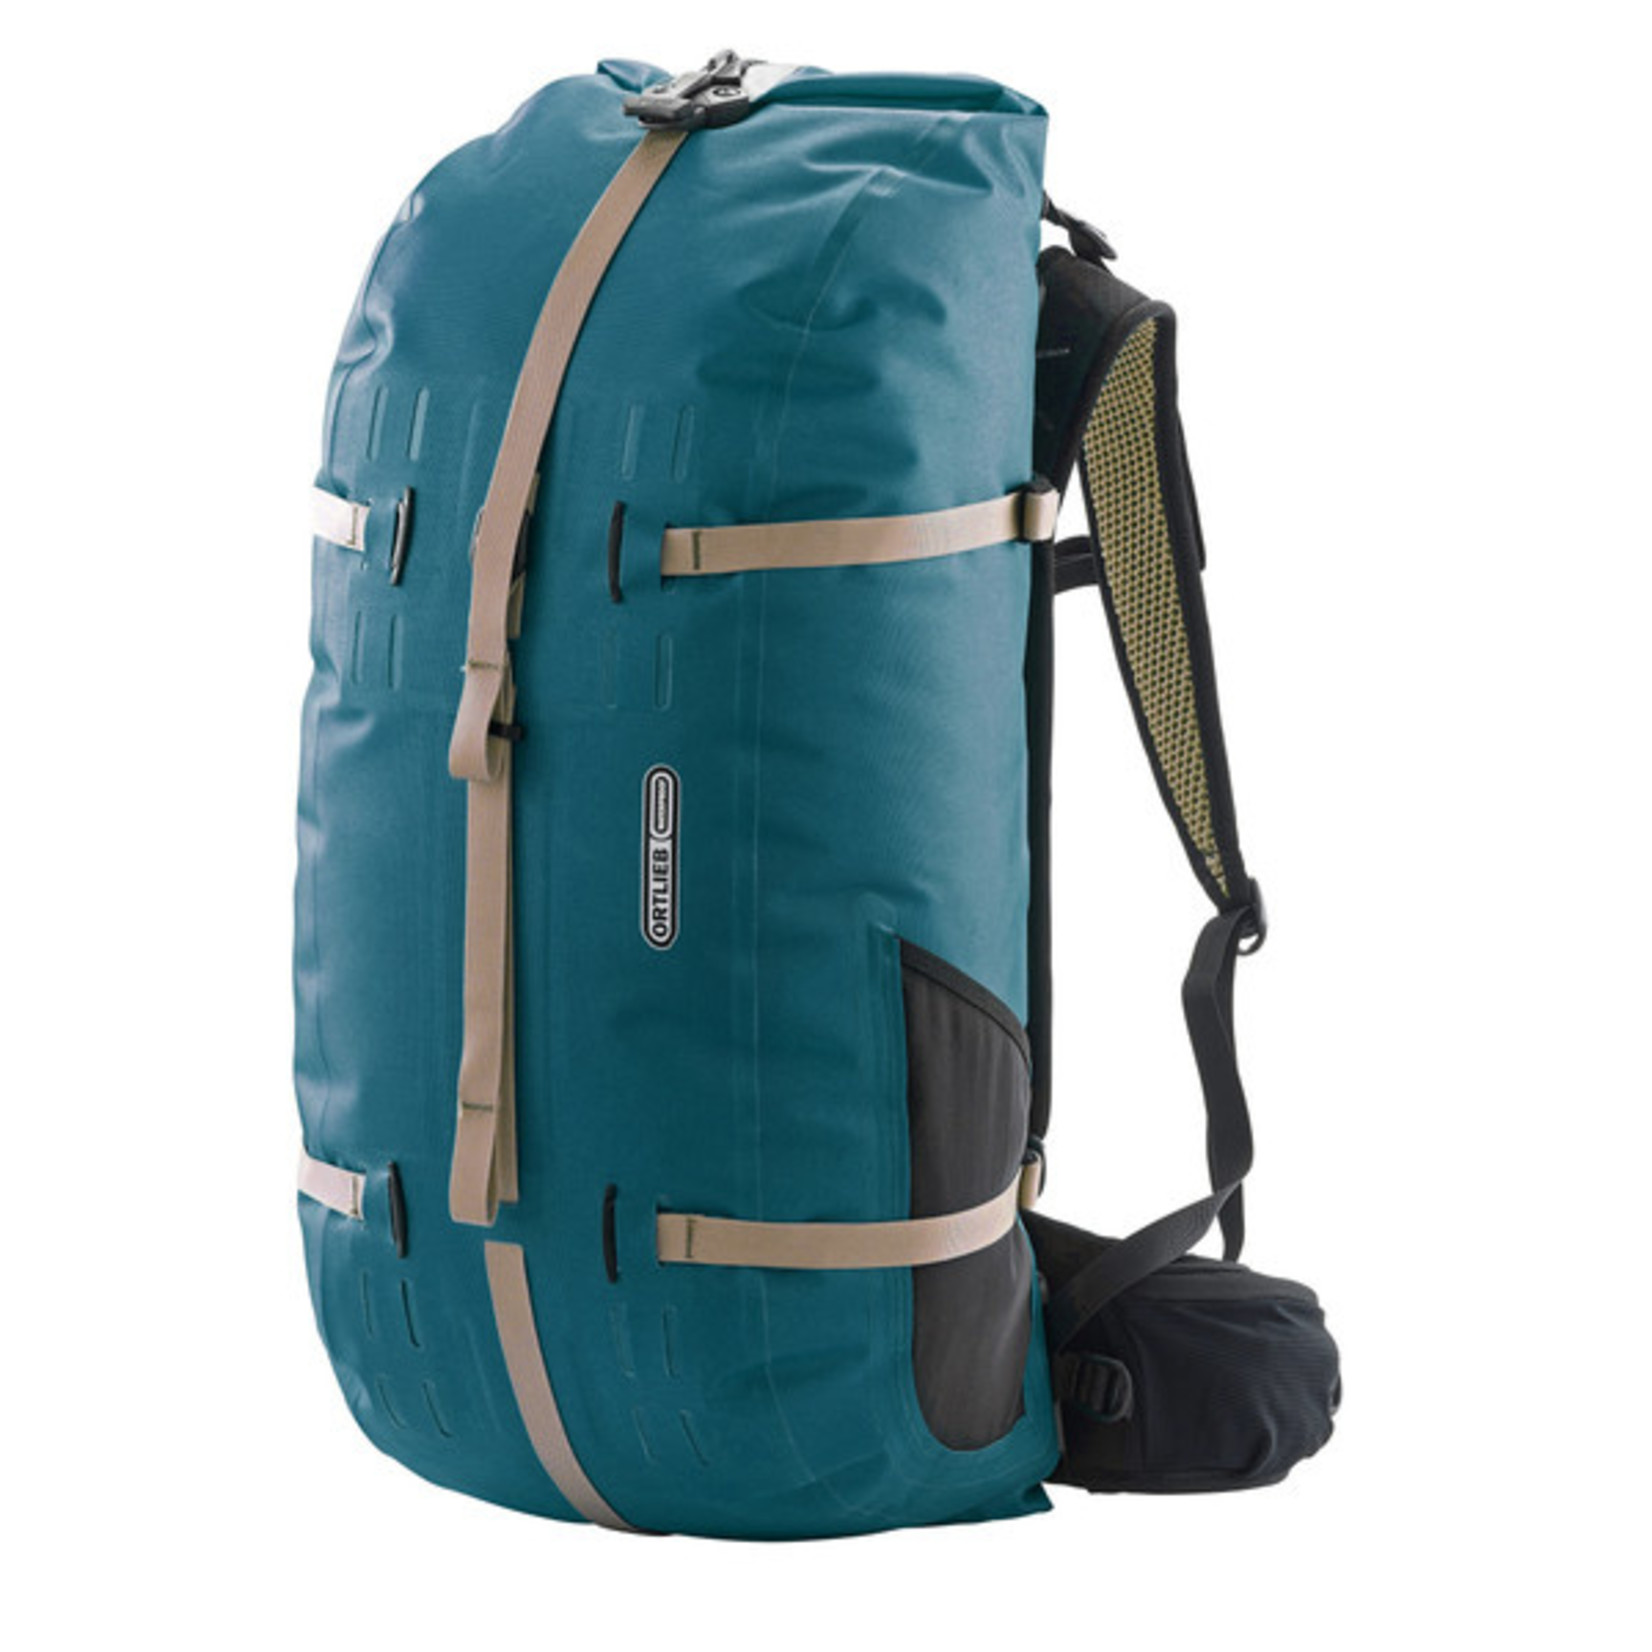 Ortlieb New Ortlieb Atrack Waterproof Backpack Travel Bag R7106 - 45L - Petrol